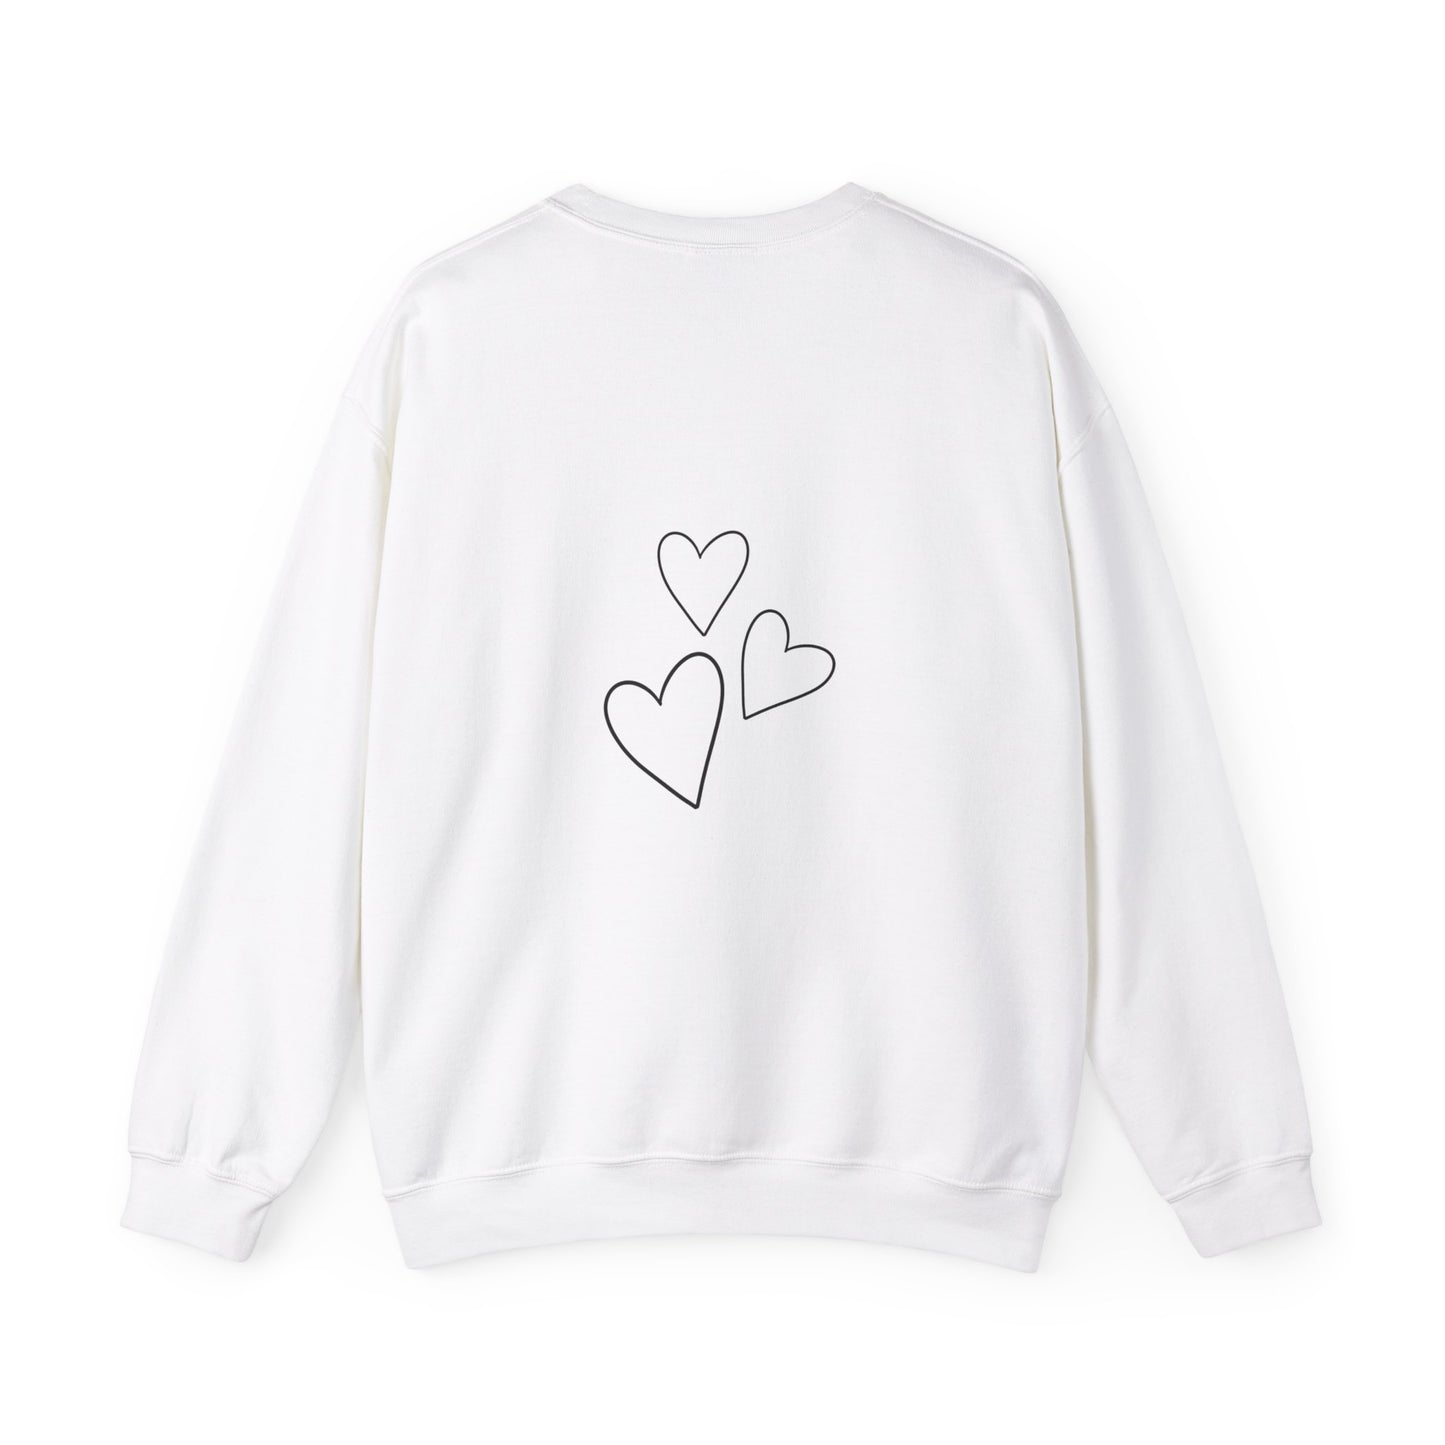 I am worthy of love Unisex Heavy Blend™ Crewneck Sweatshirt